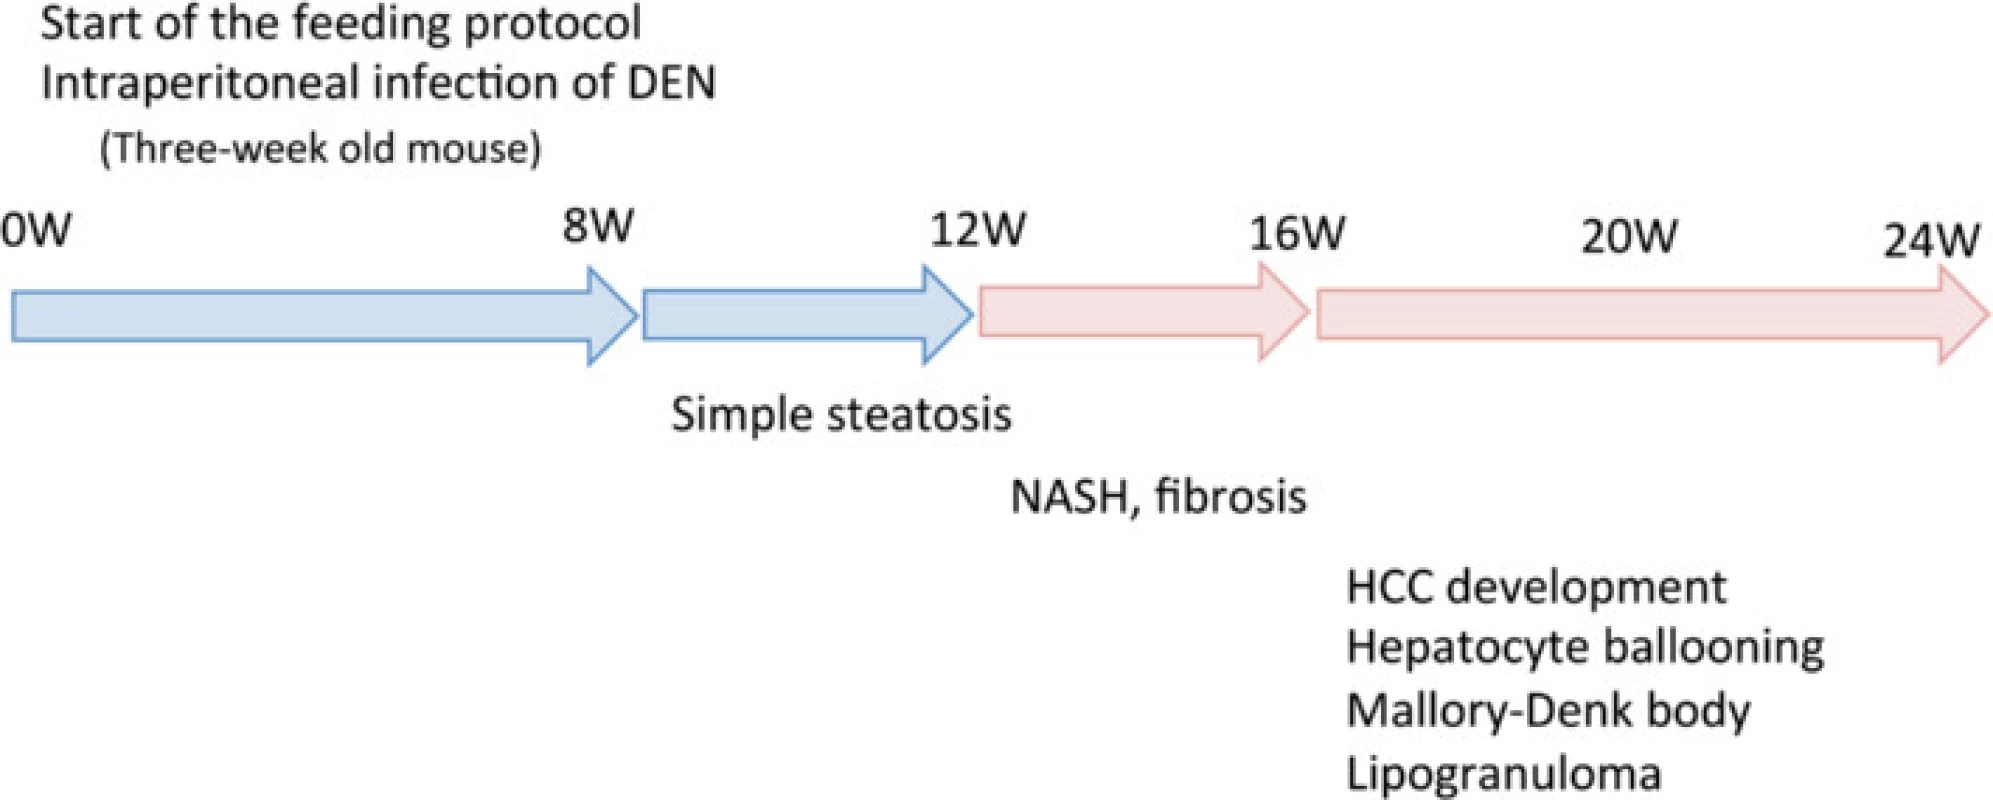 Summary of the experimental model. DEN, diethylnitrosamine; HCC, hepatocellular carcinoma; NASH, nonalcoholic steatohepatitis